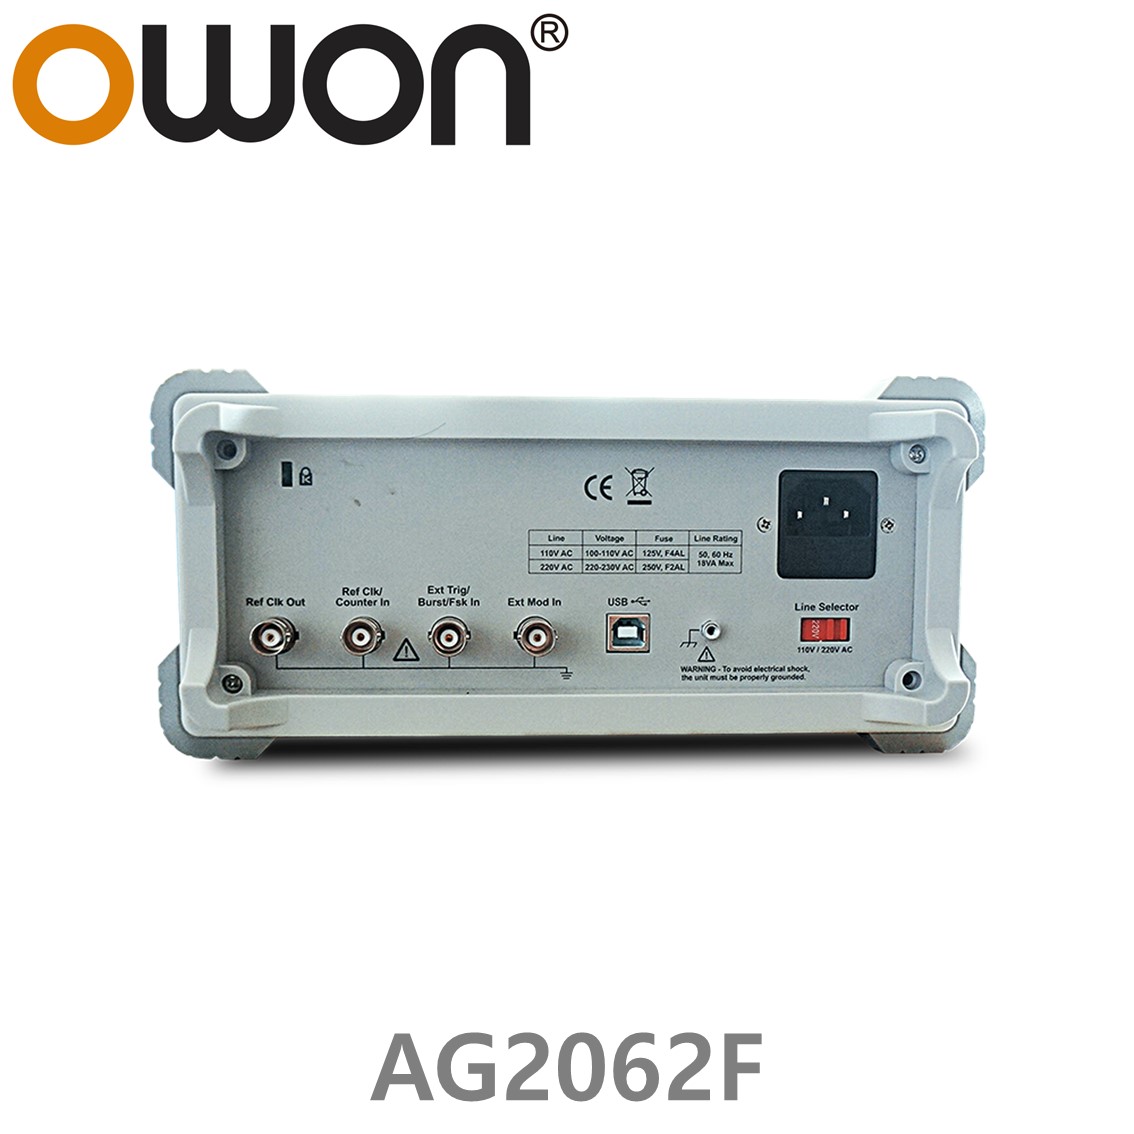 [ OWON ] AG2062F 임의 파형발생기 2CH, 60MHz, 250MS/s, 주파수카운터포함 포괄적 변조, AM, FM, PM, FSK